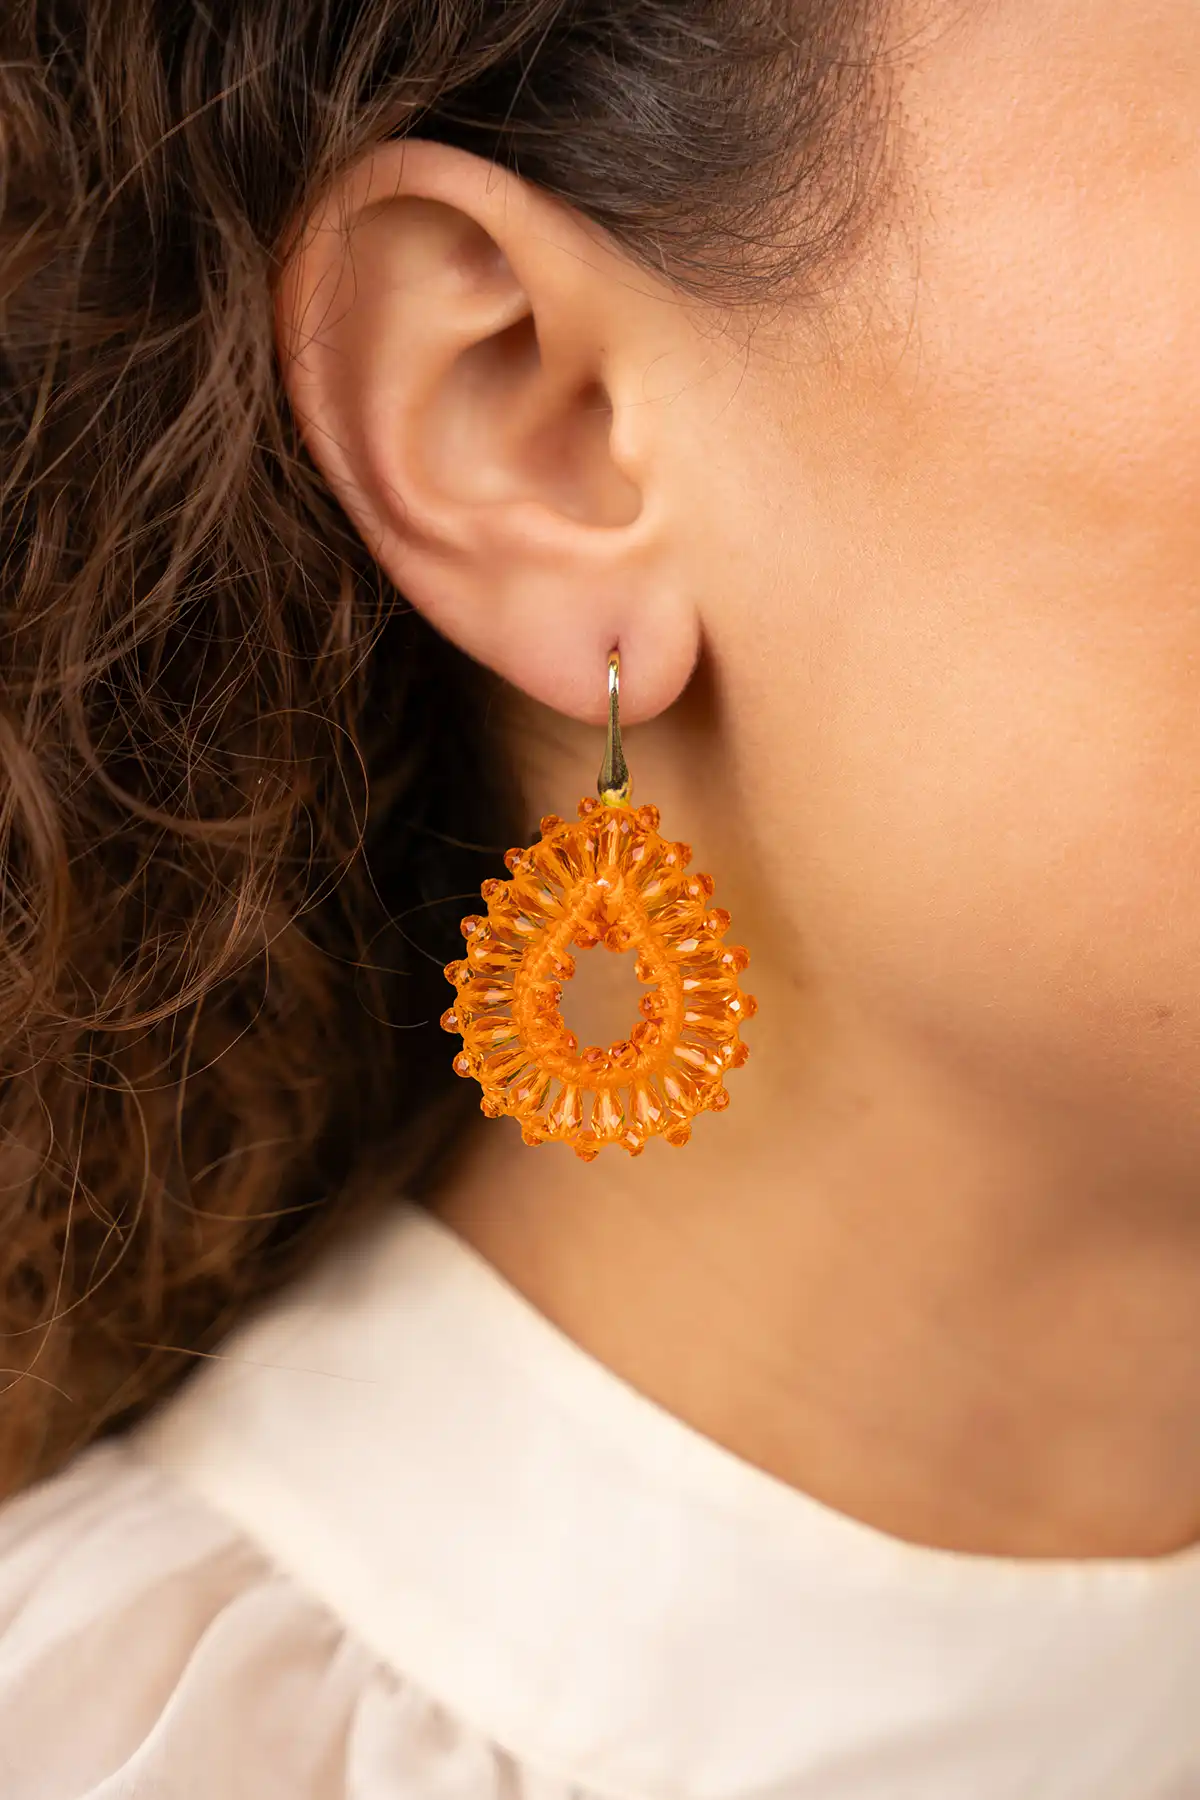 Orange earrings Robin drop S lionlott-theme.productDescriptionPage.SEO.byTheBrand